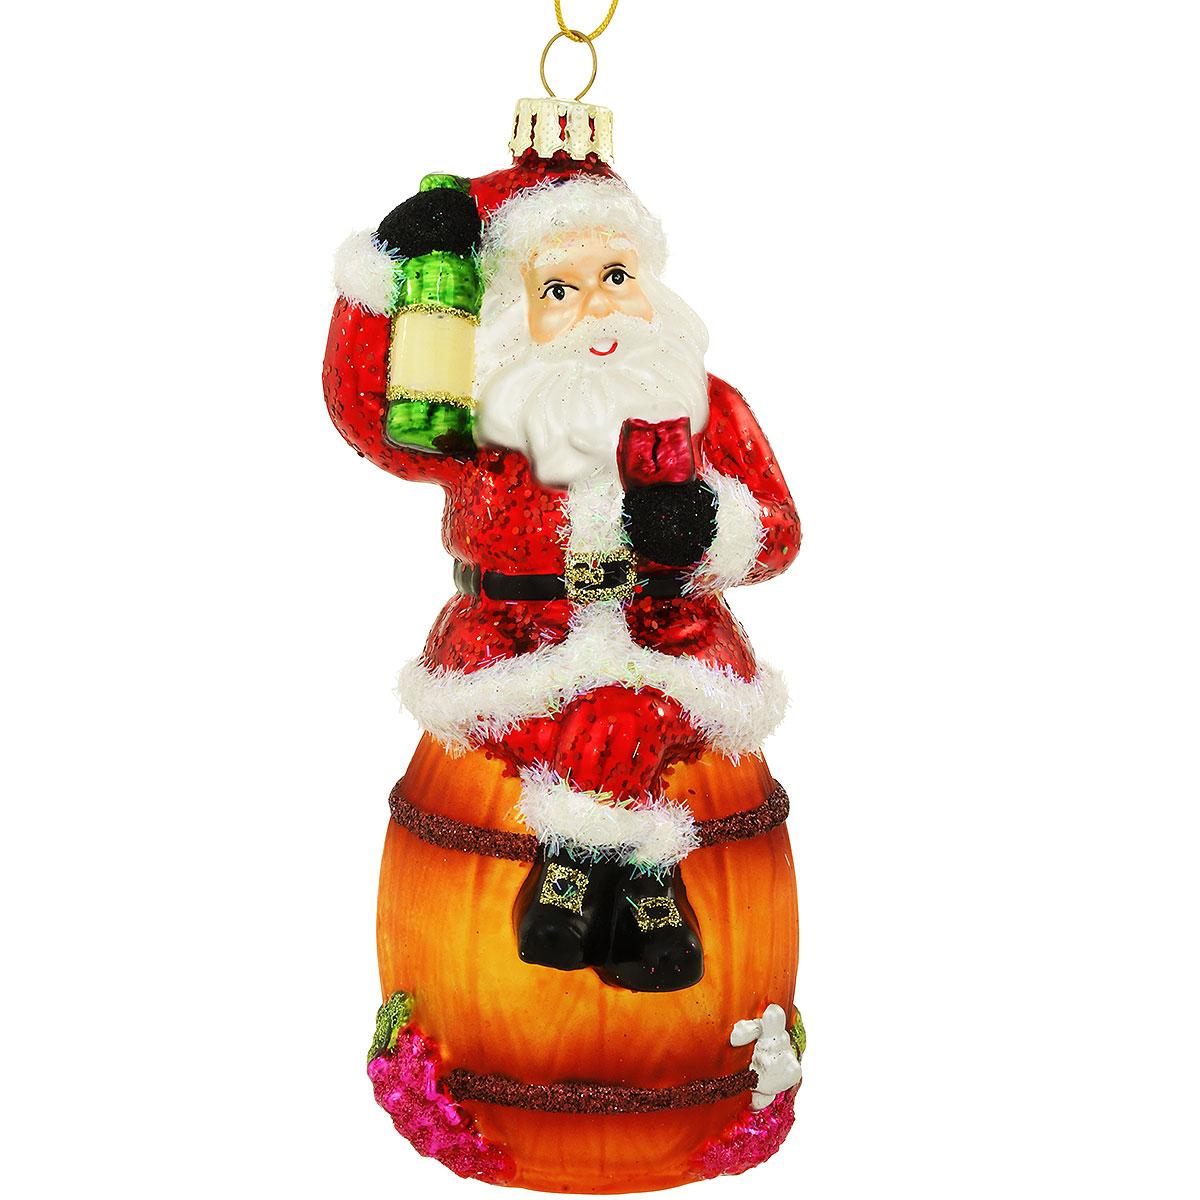 Santa On Wine Barrel Ornament